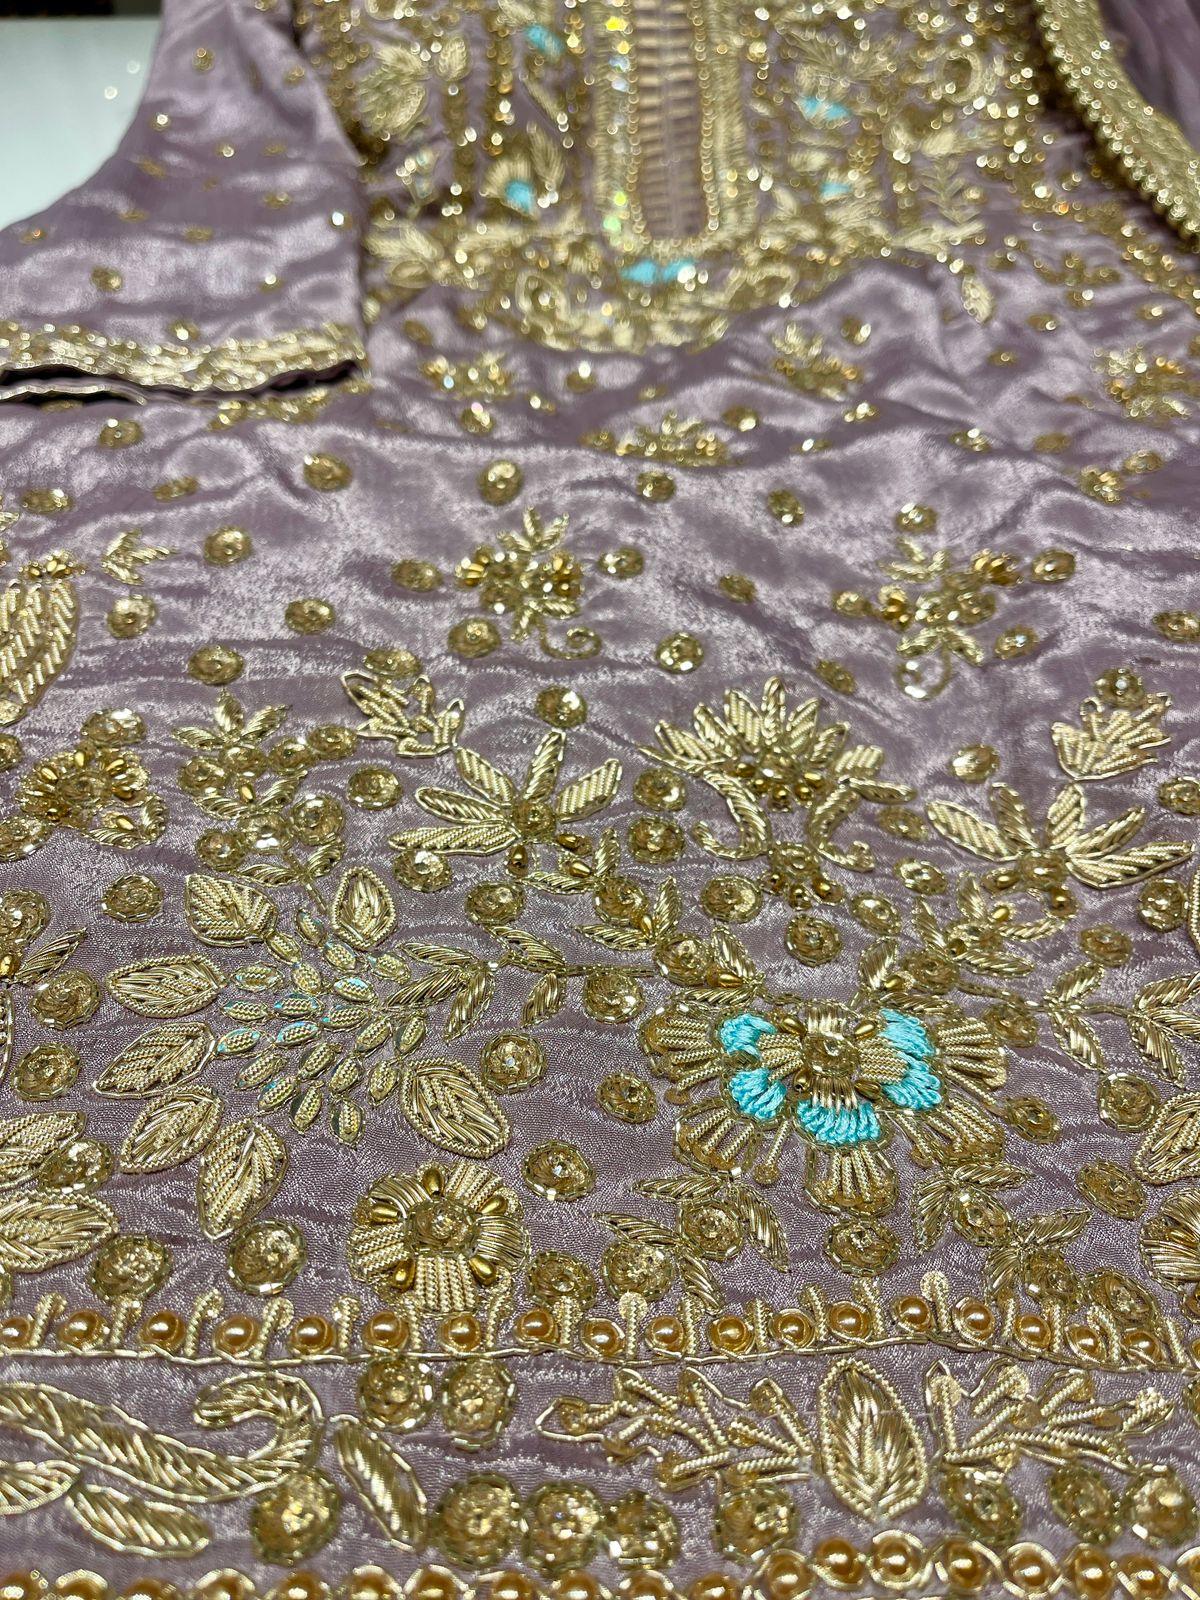 Dusty Lavender Pakistani Suit , Sharara , Dupatta with Heavy Dabka/ Zardozi and Stone Work - Inayakhan Shop 